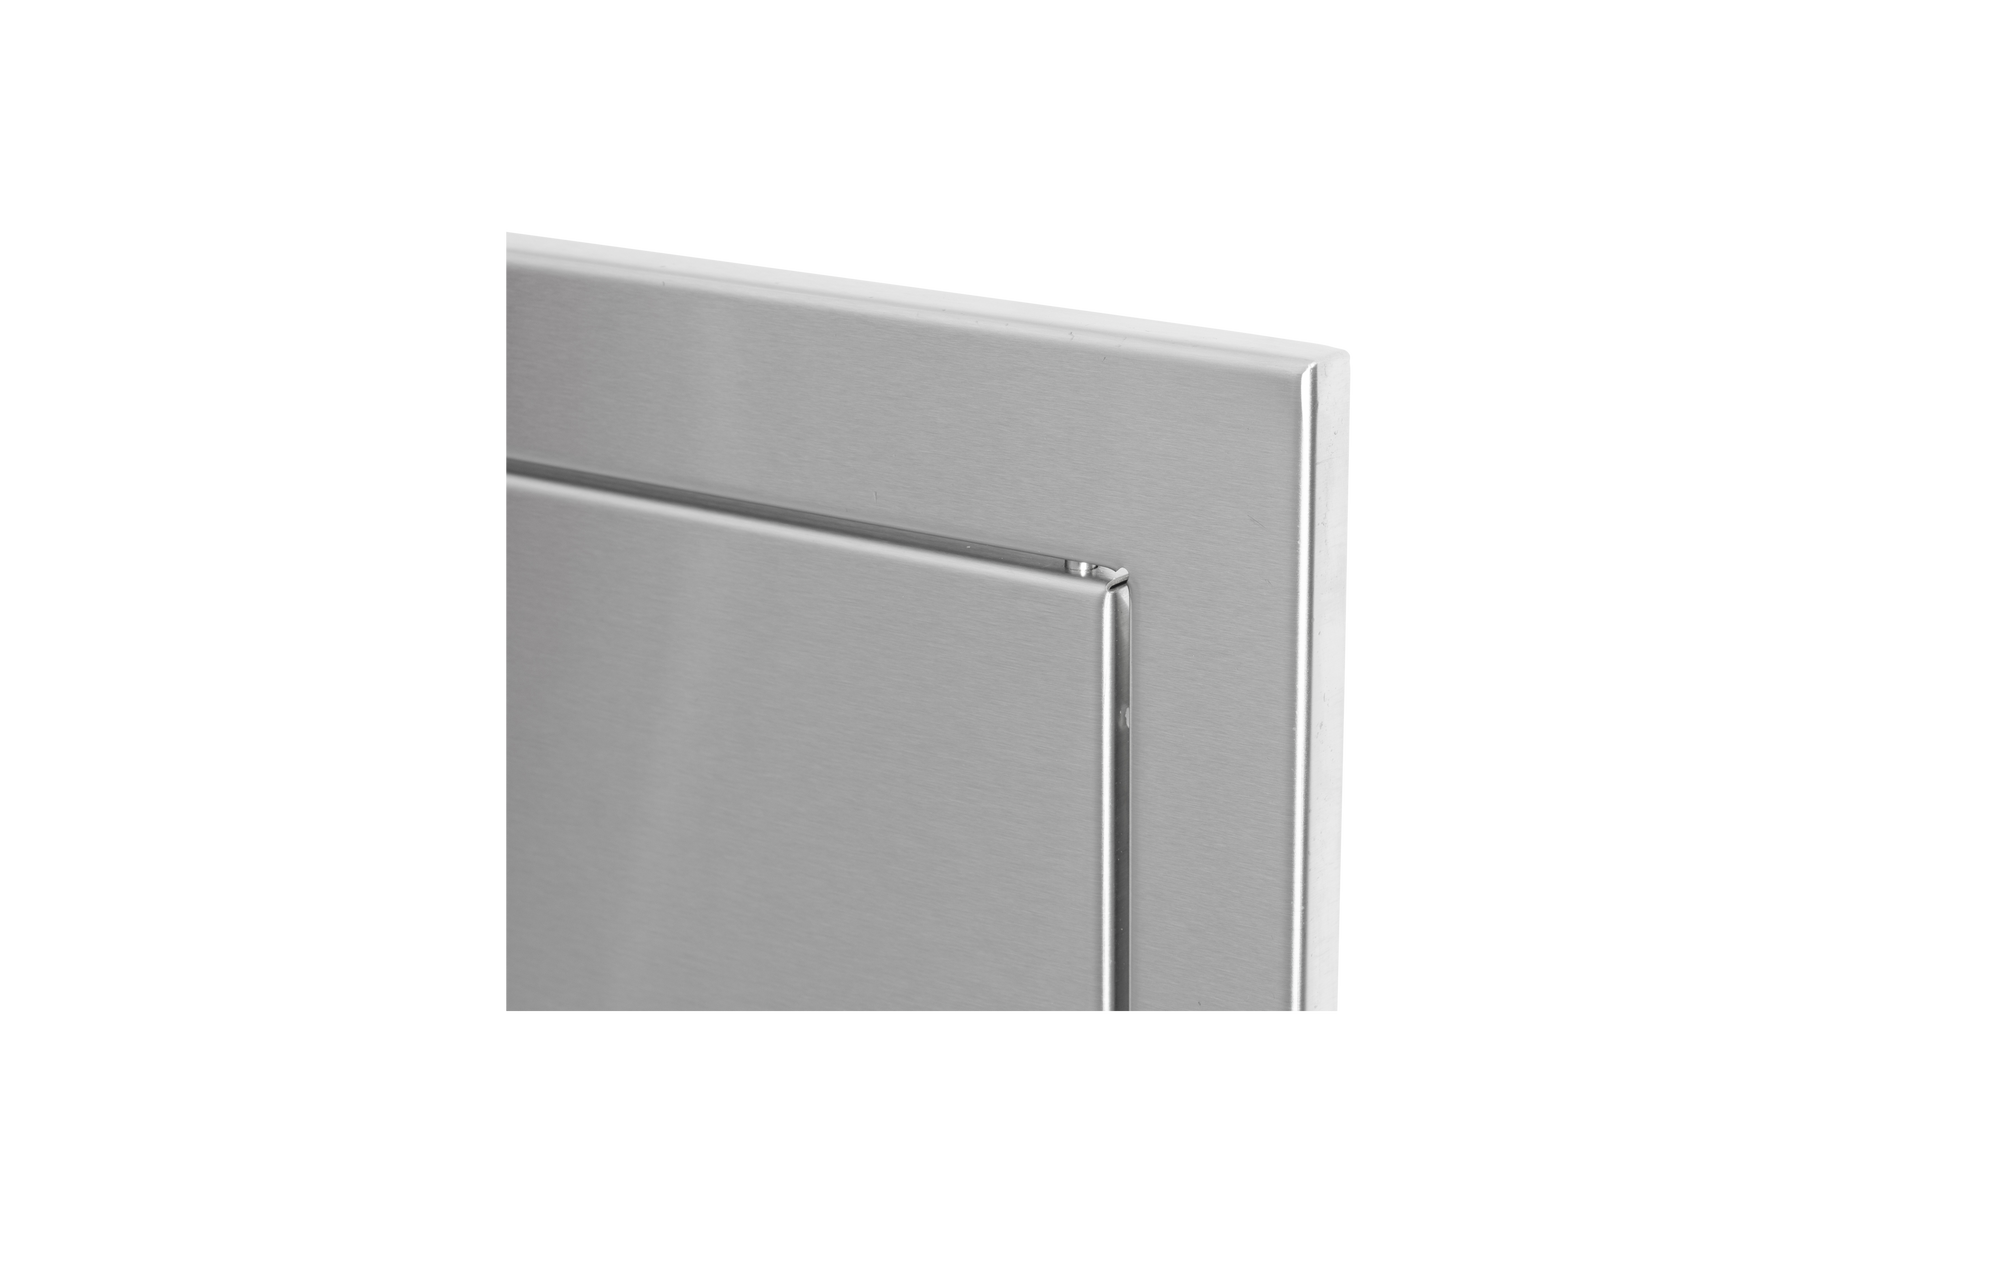 Bull XL Stainless Vertical Access Door w/ Reveal, 304 Grade 16 Gauge, Double Walled